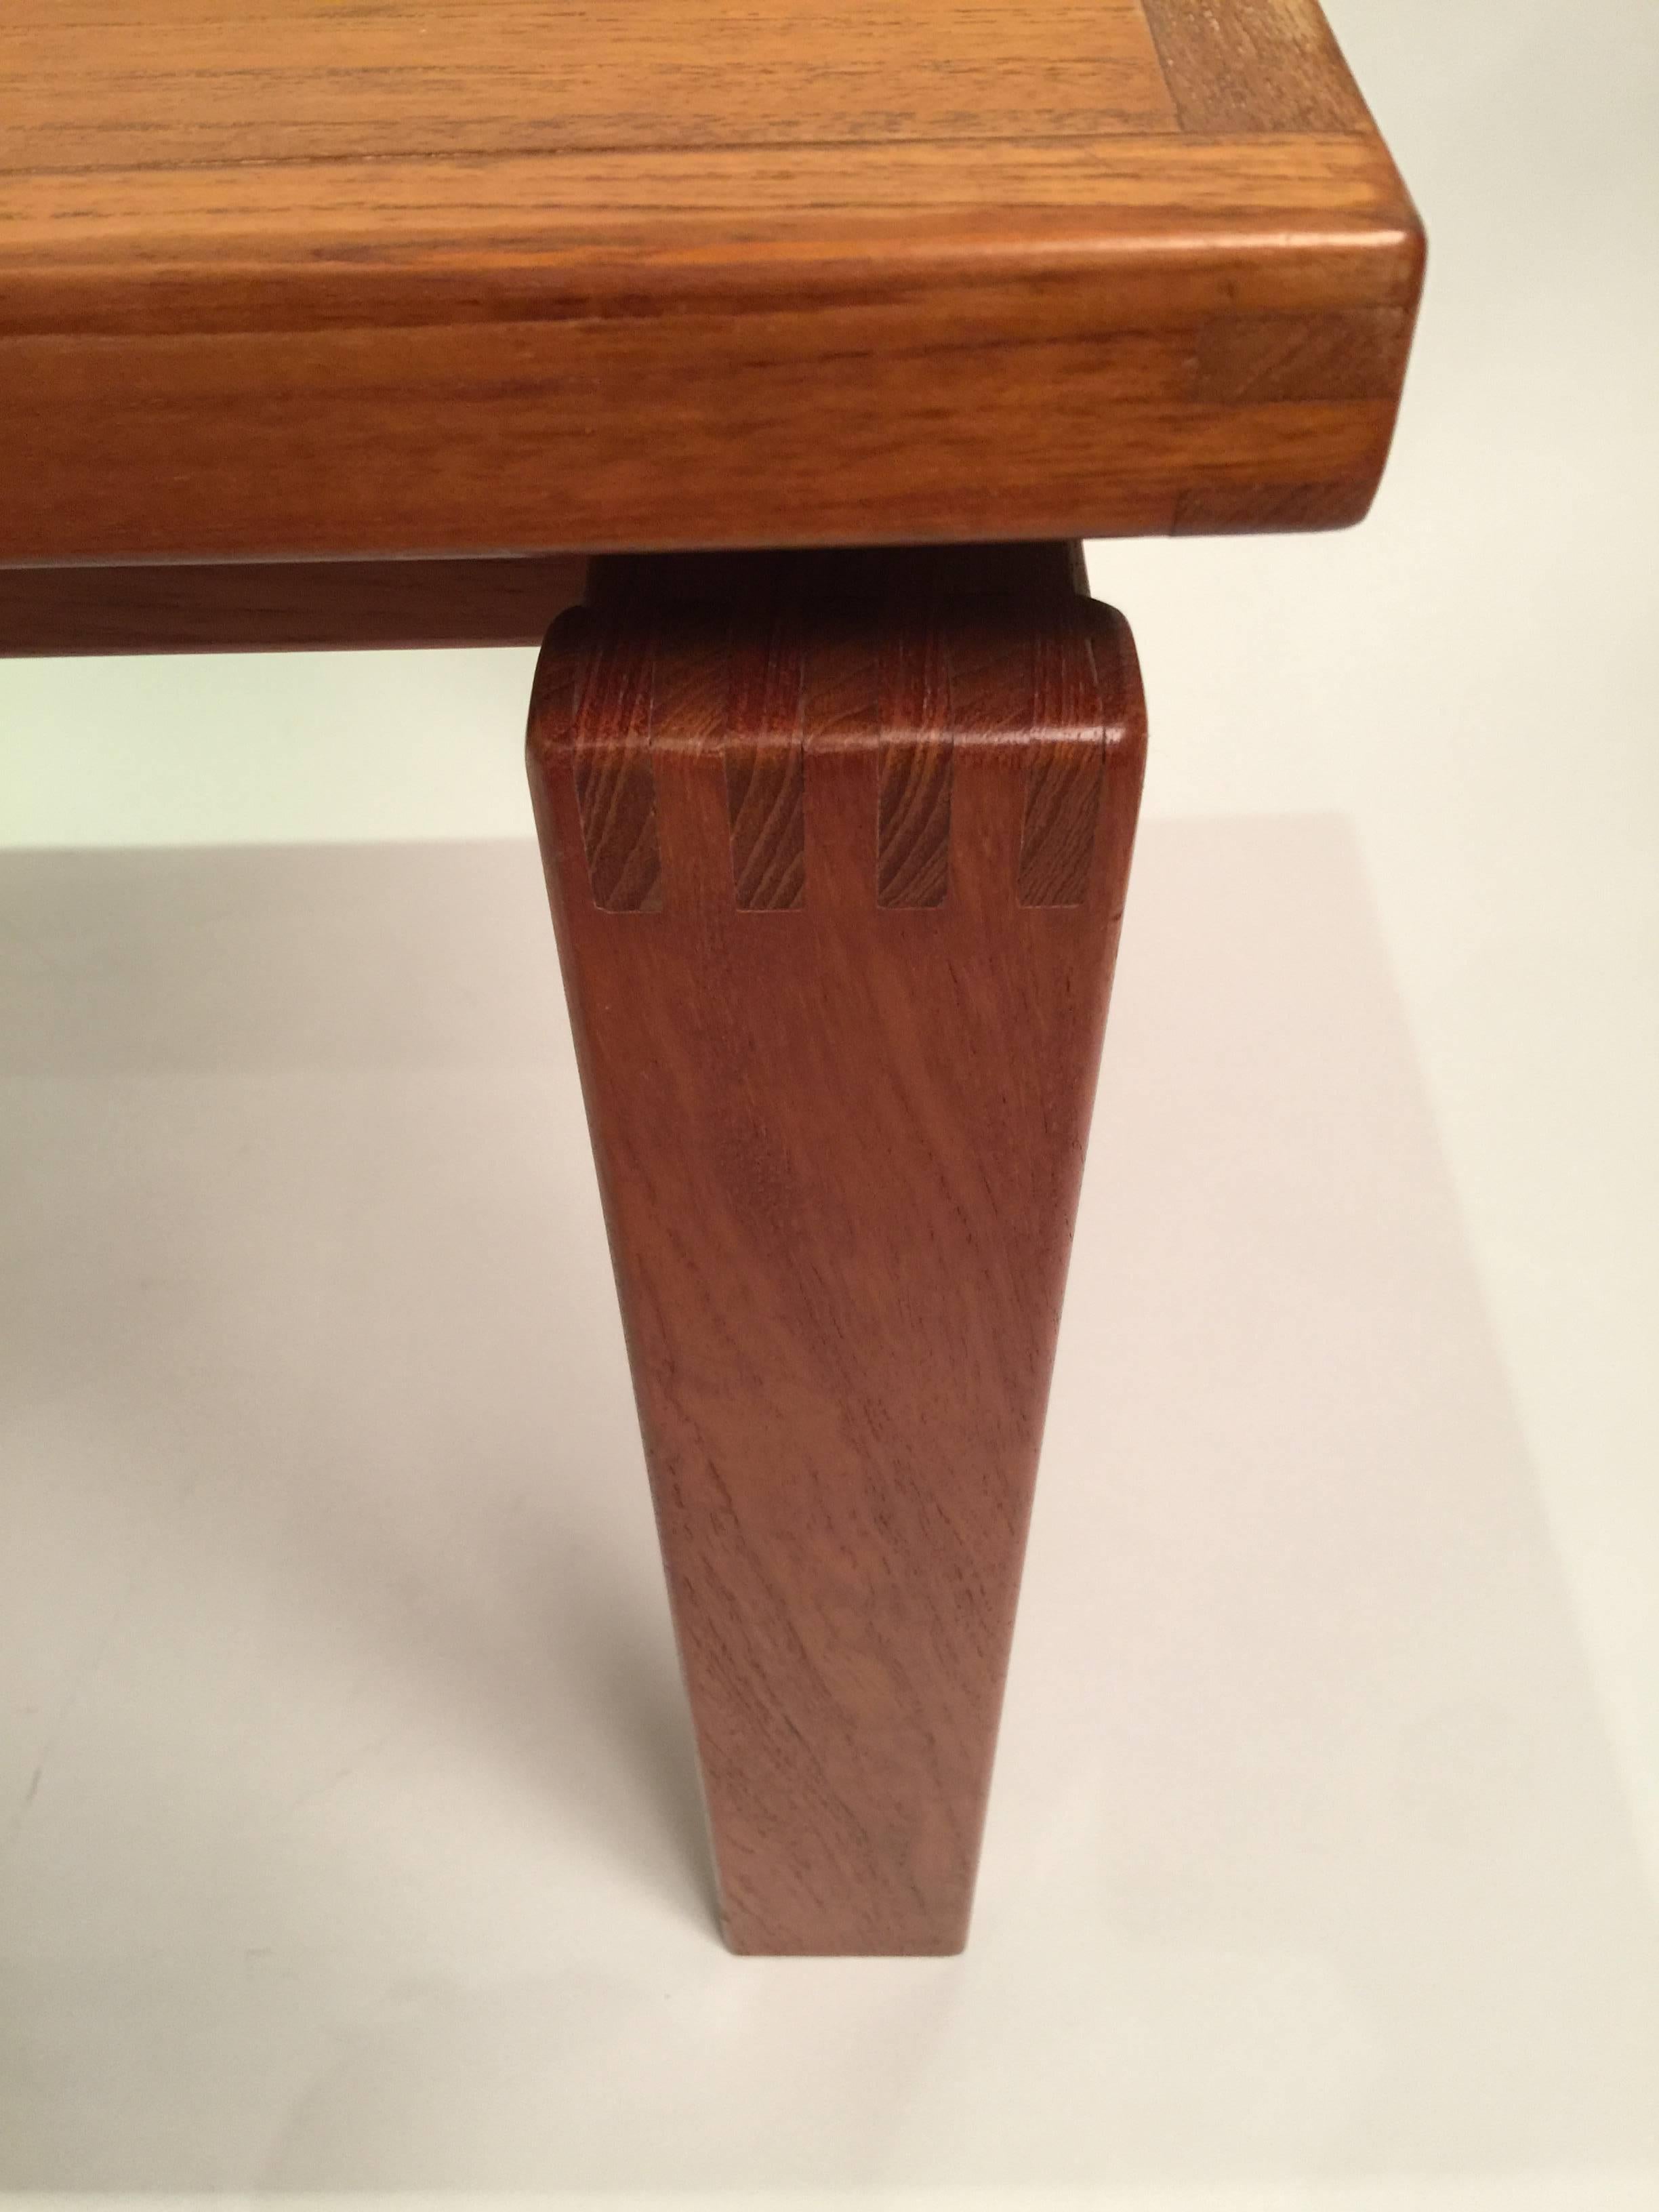 Scandinavian Modern Trioh Dovetailed Side Table